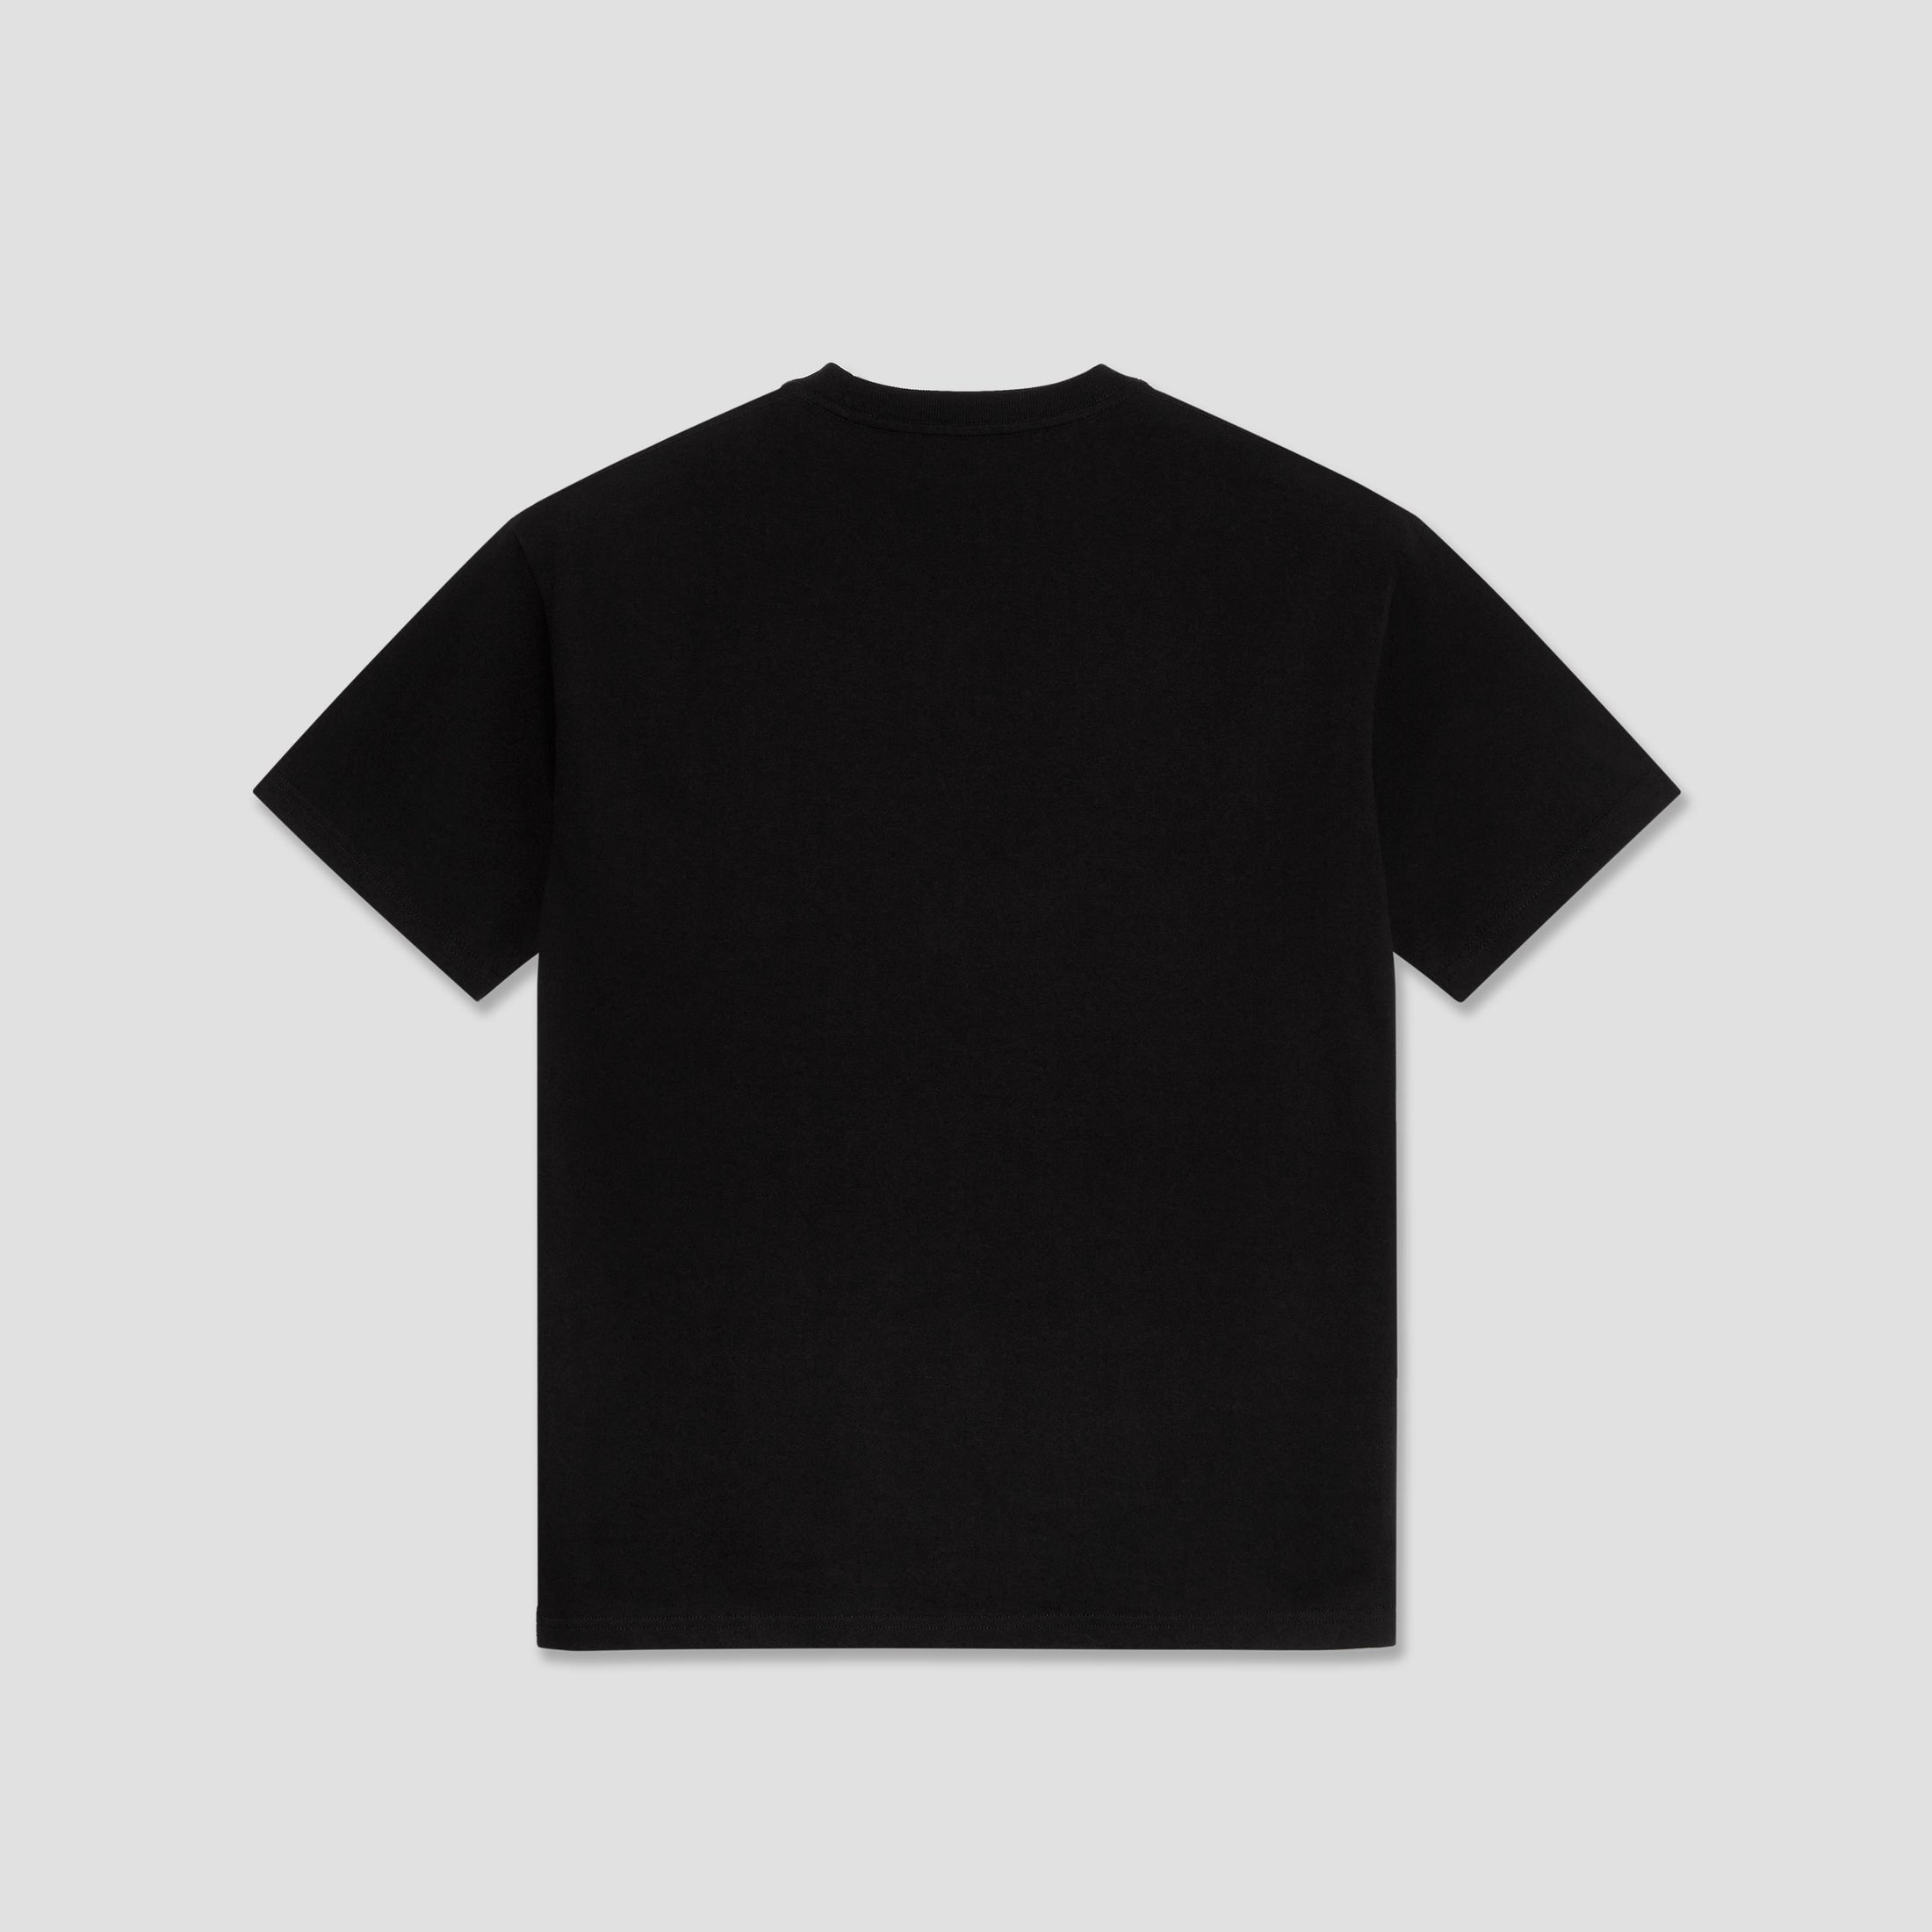 Last Resort AB Script T-Shirt Black